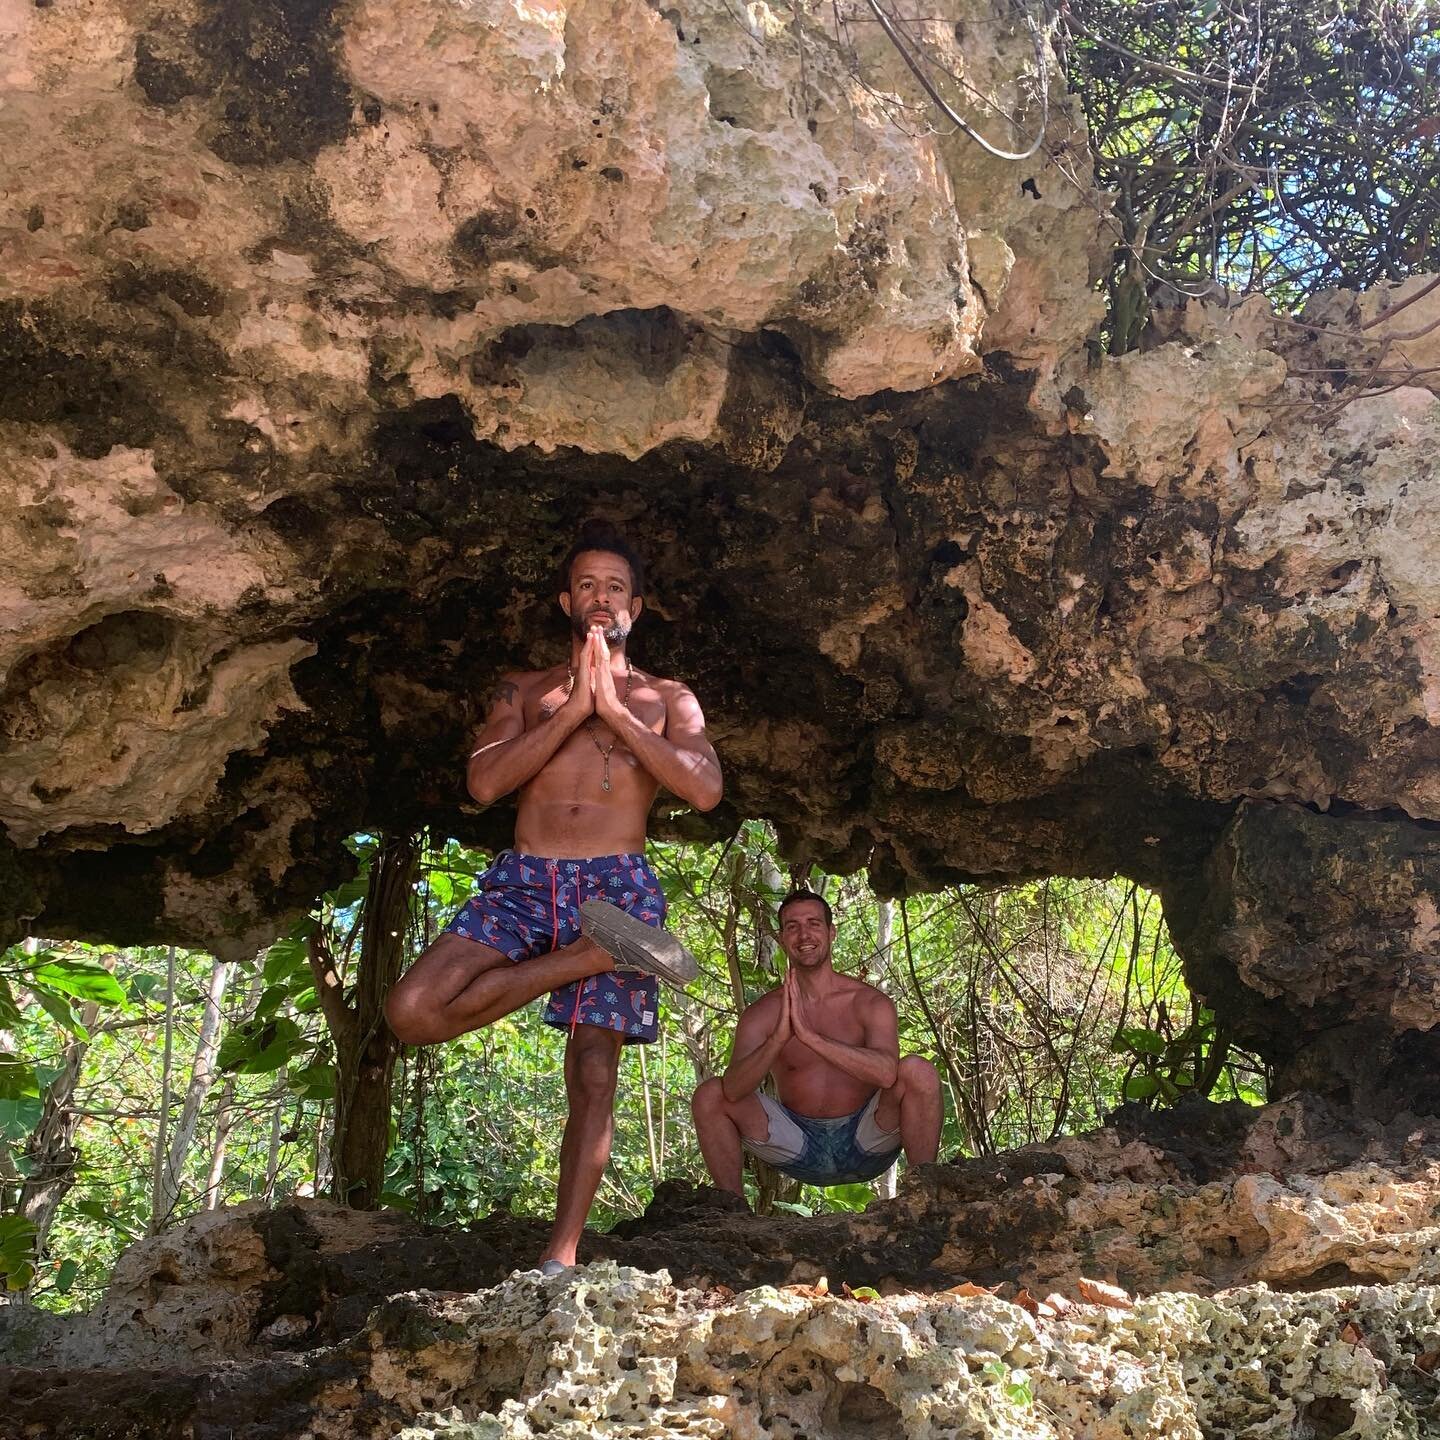 @seanmcdog and I almost walked by this  cave. Always fun to take a yoga asana photo op 😁 thanks @cillayogini for the 📸. #puertorico #yoga #cave #tree #vriksasana #squat #malasana #vrksasana #yogateacher #sukhayoga #hiking #explore #nature #vt #verm